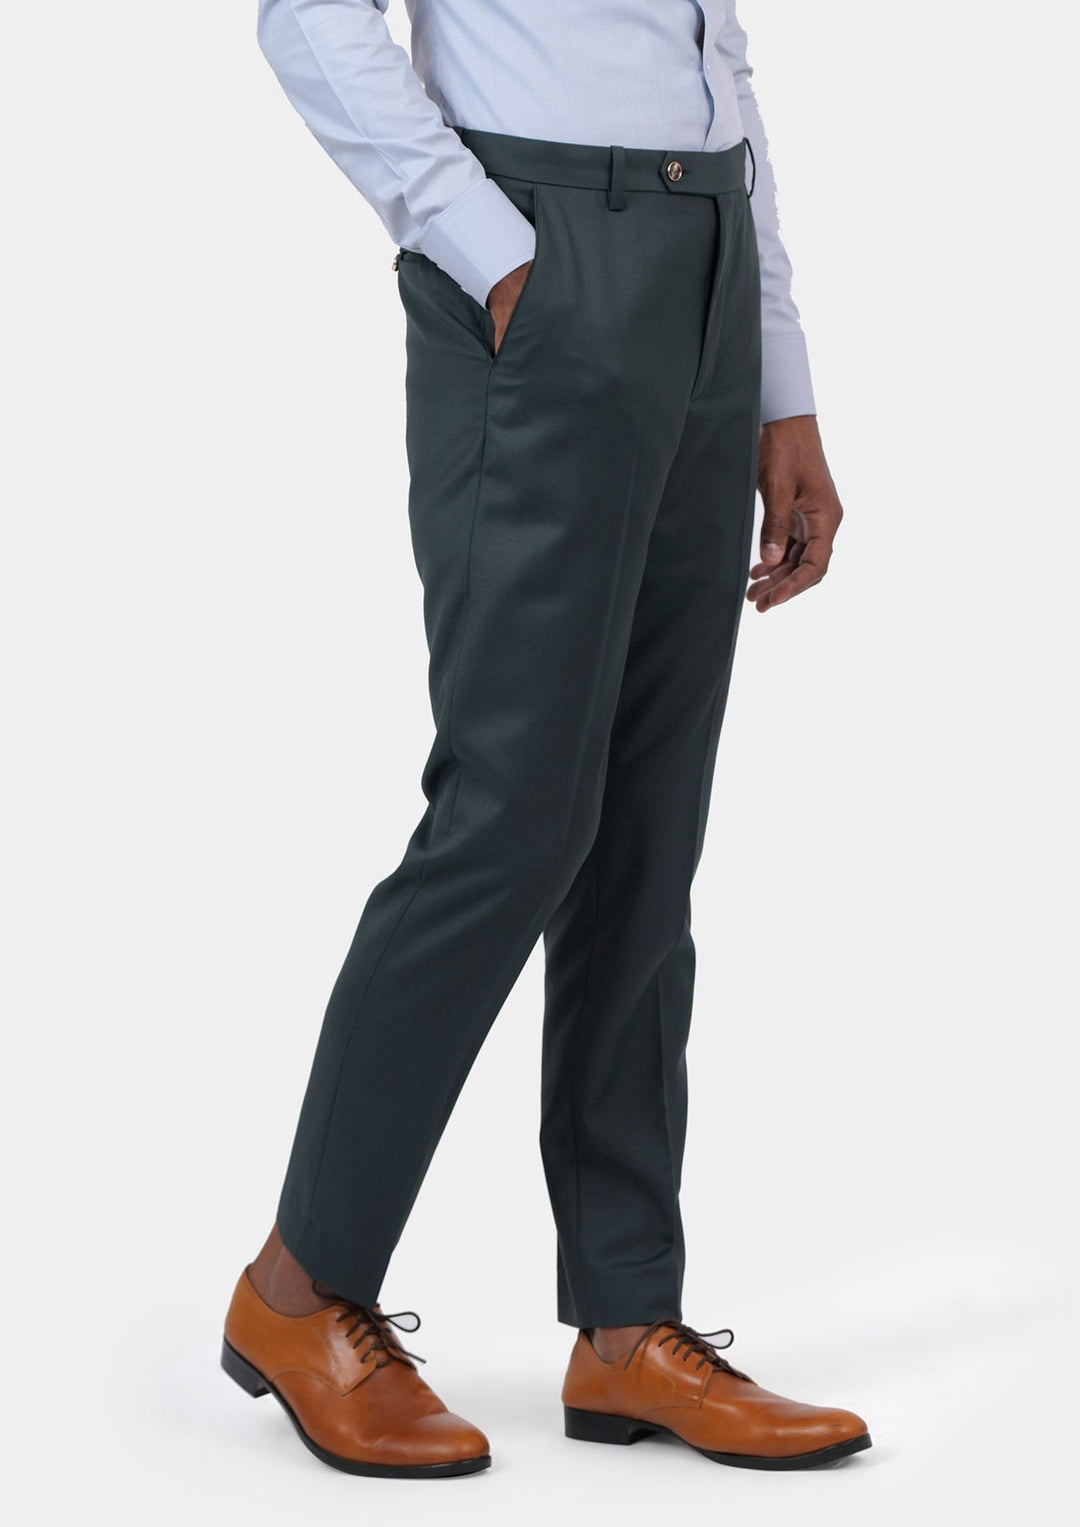 Bryant Vintage Green Twill Suit - SARTORO